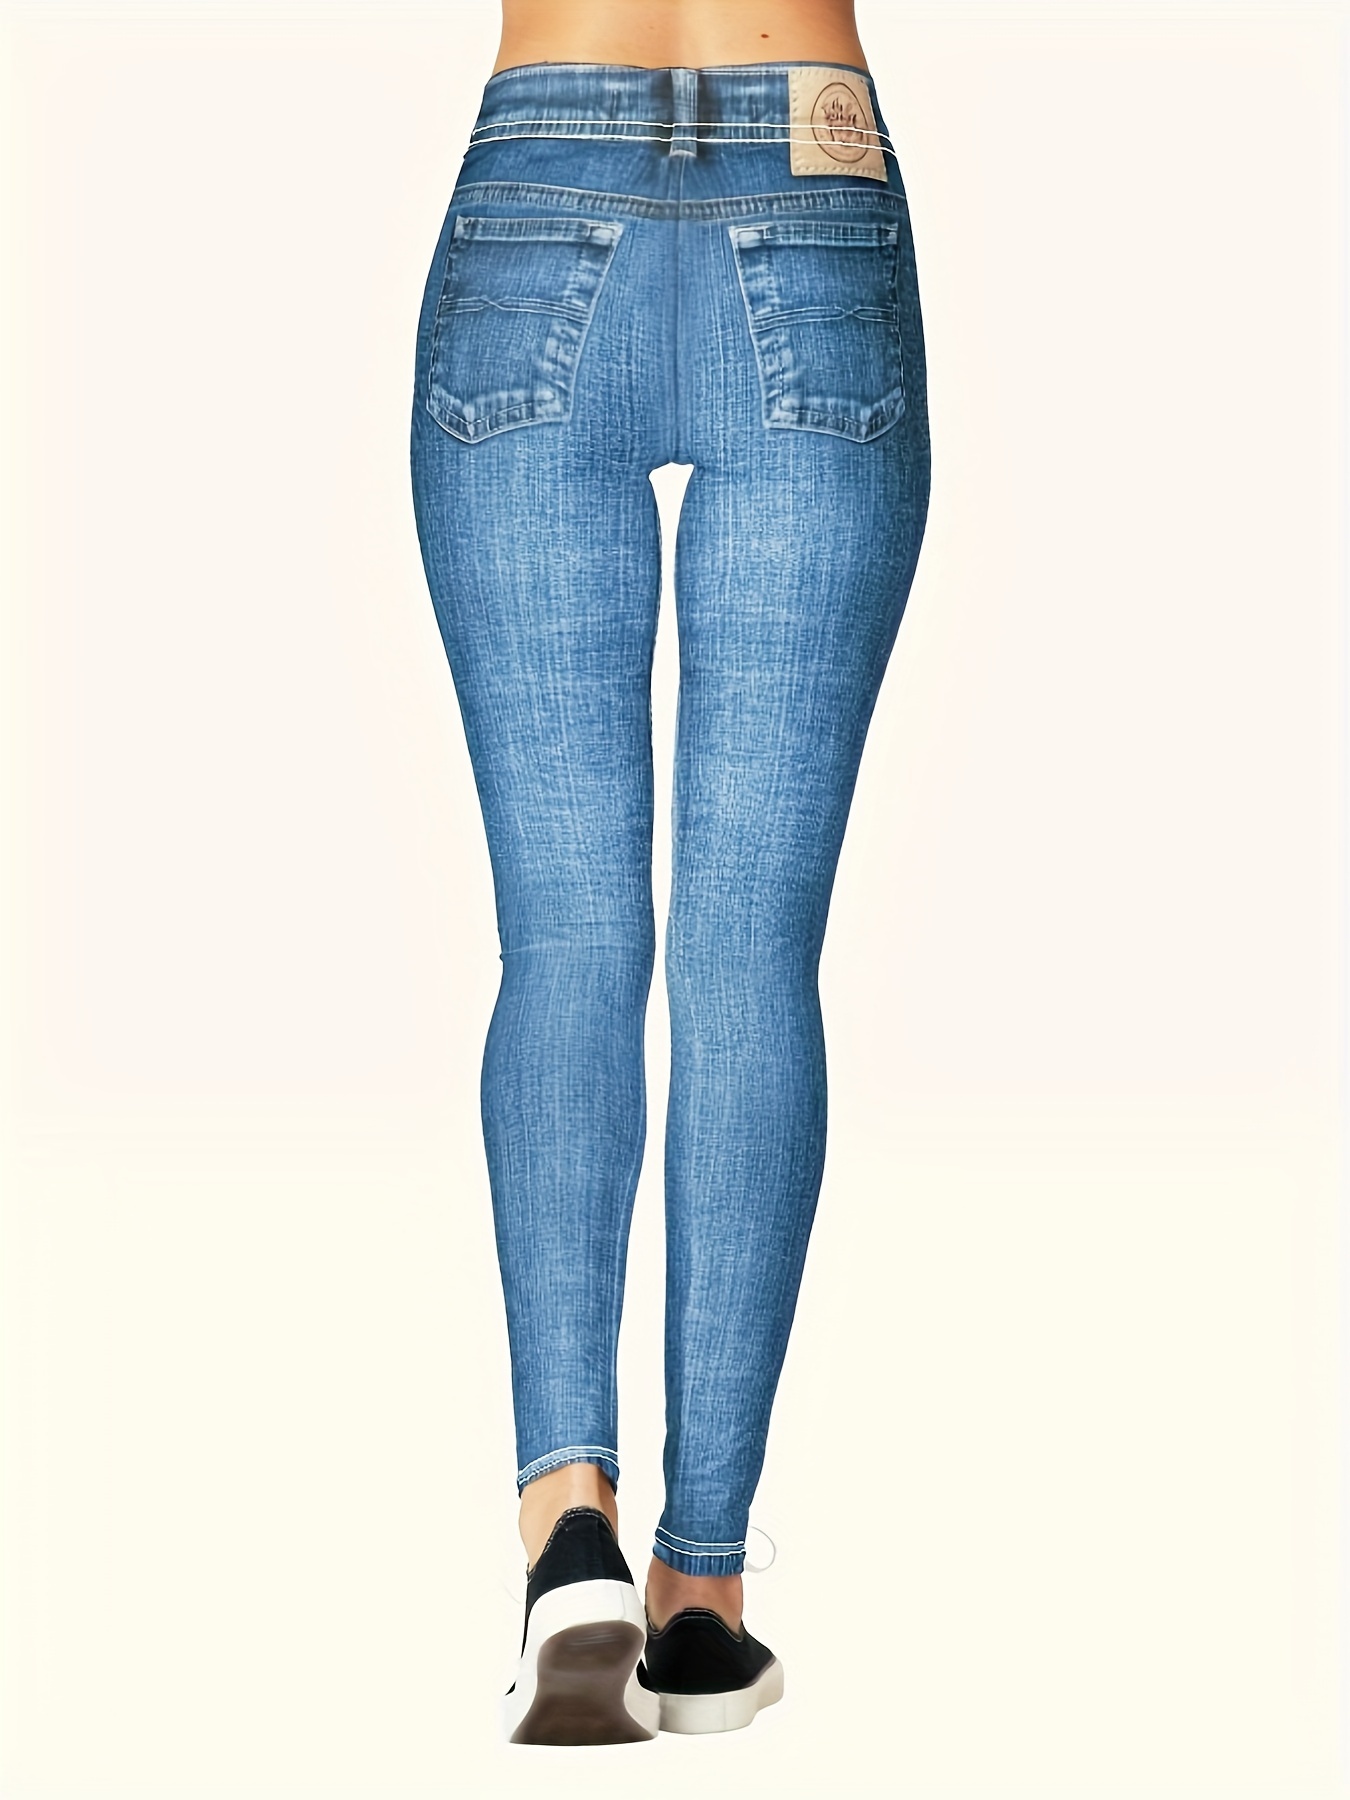 Women Jeans Long Casual Printed Pants Fashion Pants Pants for